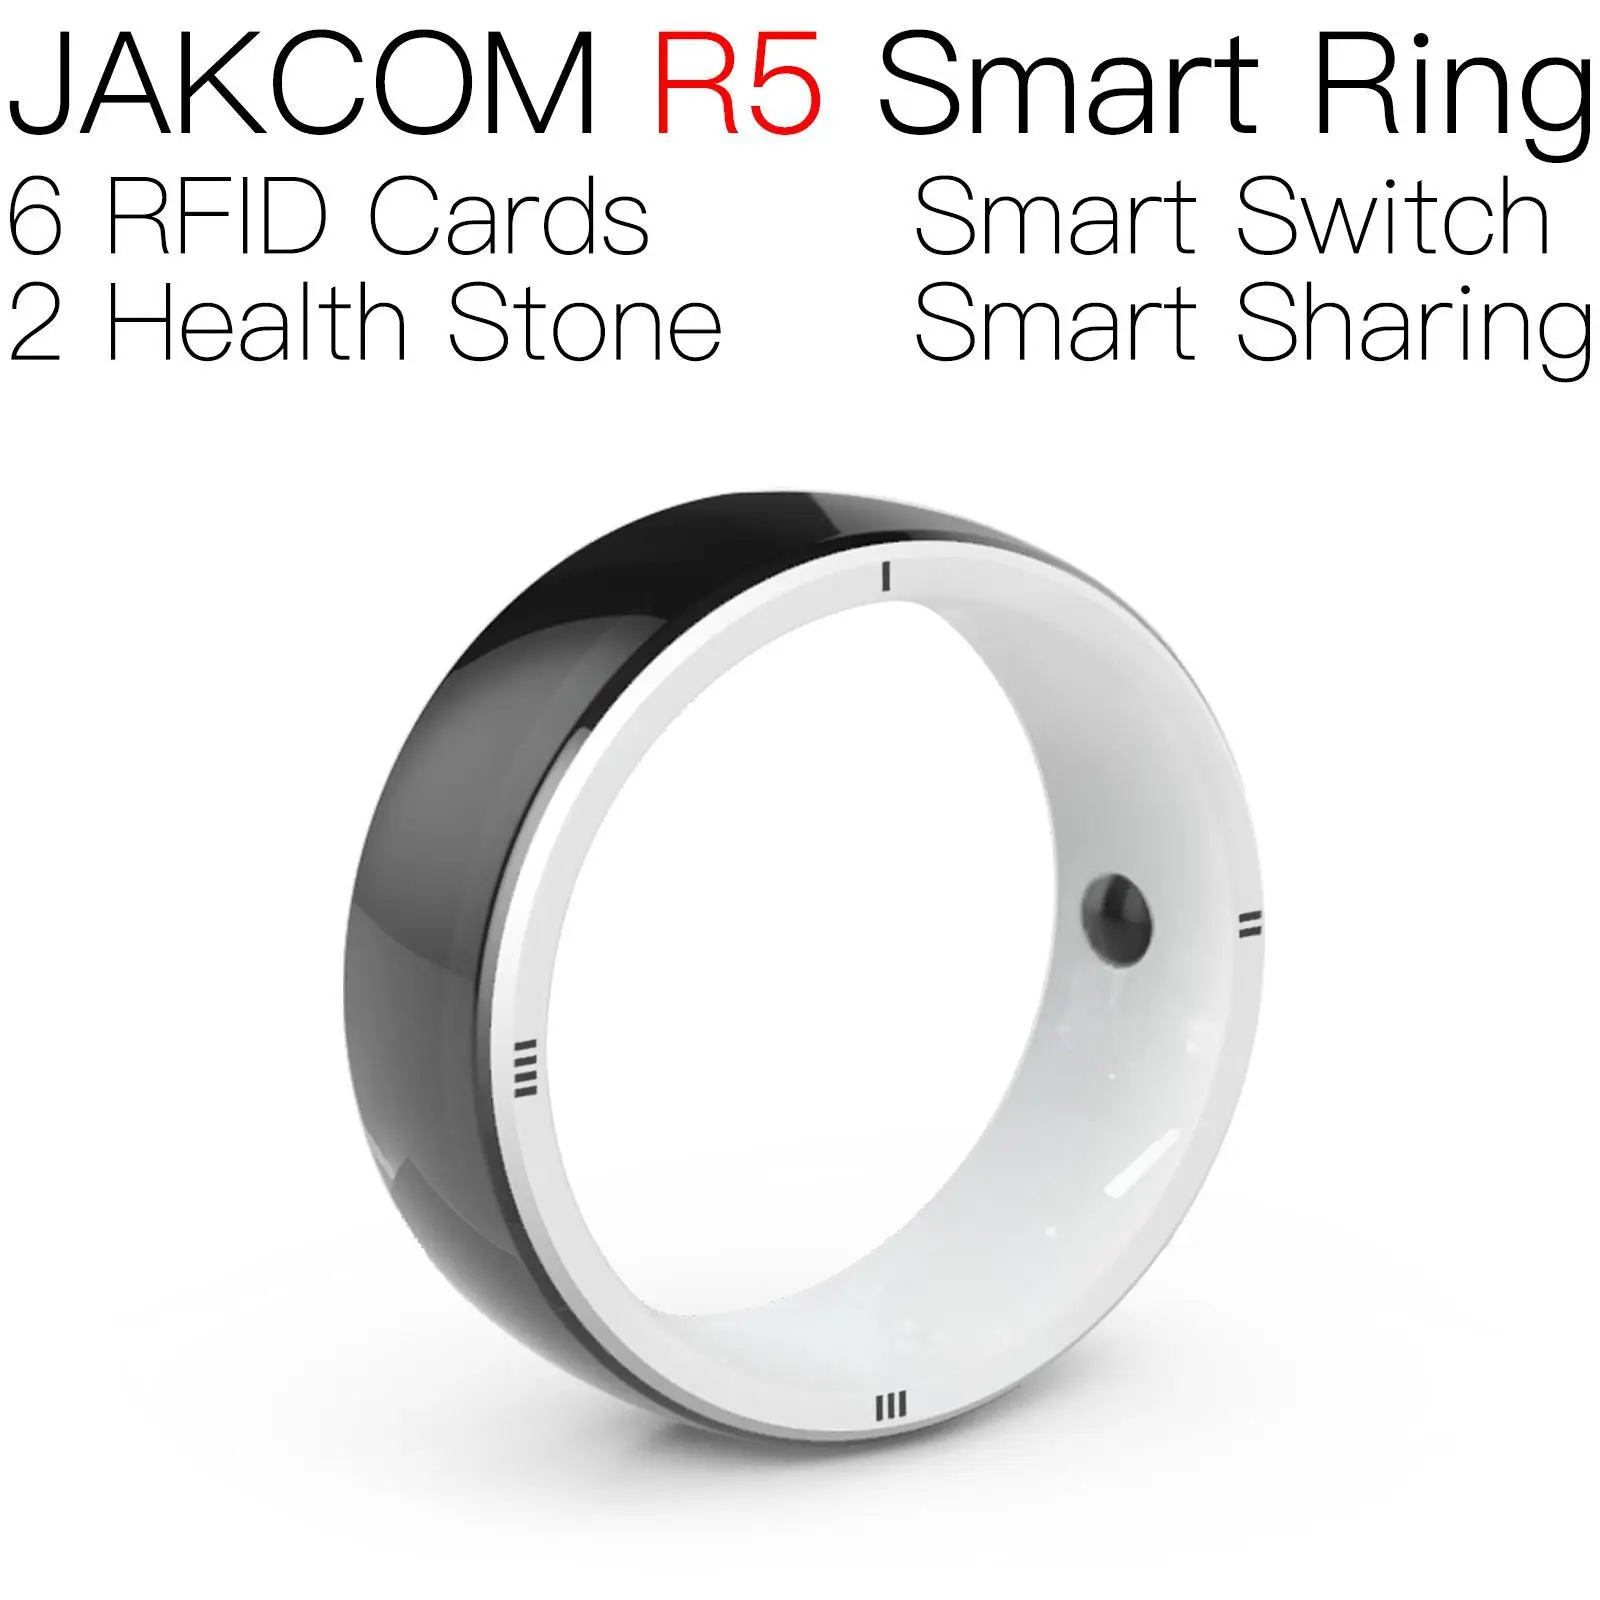 

JAKCOM R5 Smart Ring New arrival as emblem amibo tags products padlock ic card rfid 15693 targetas linux short nfc remote